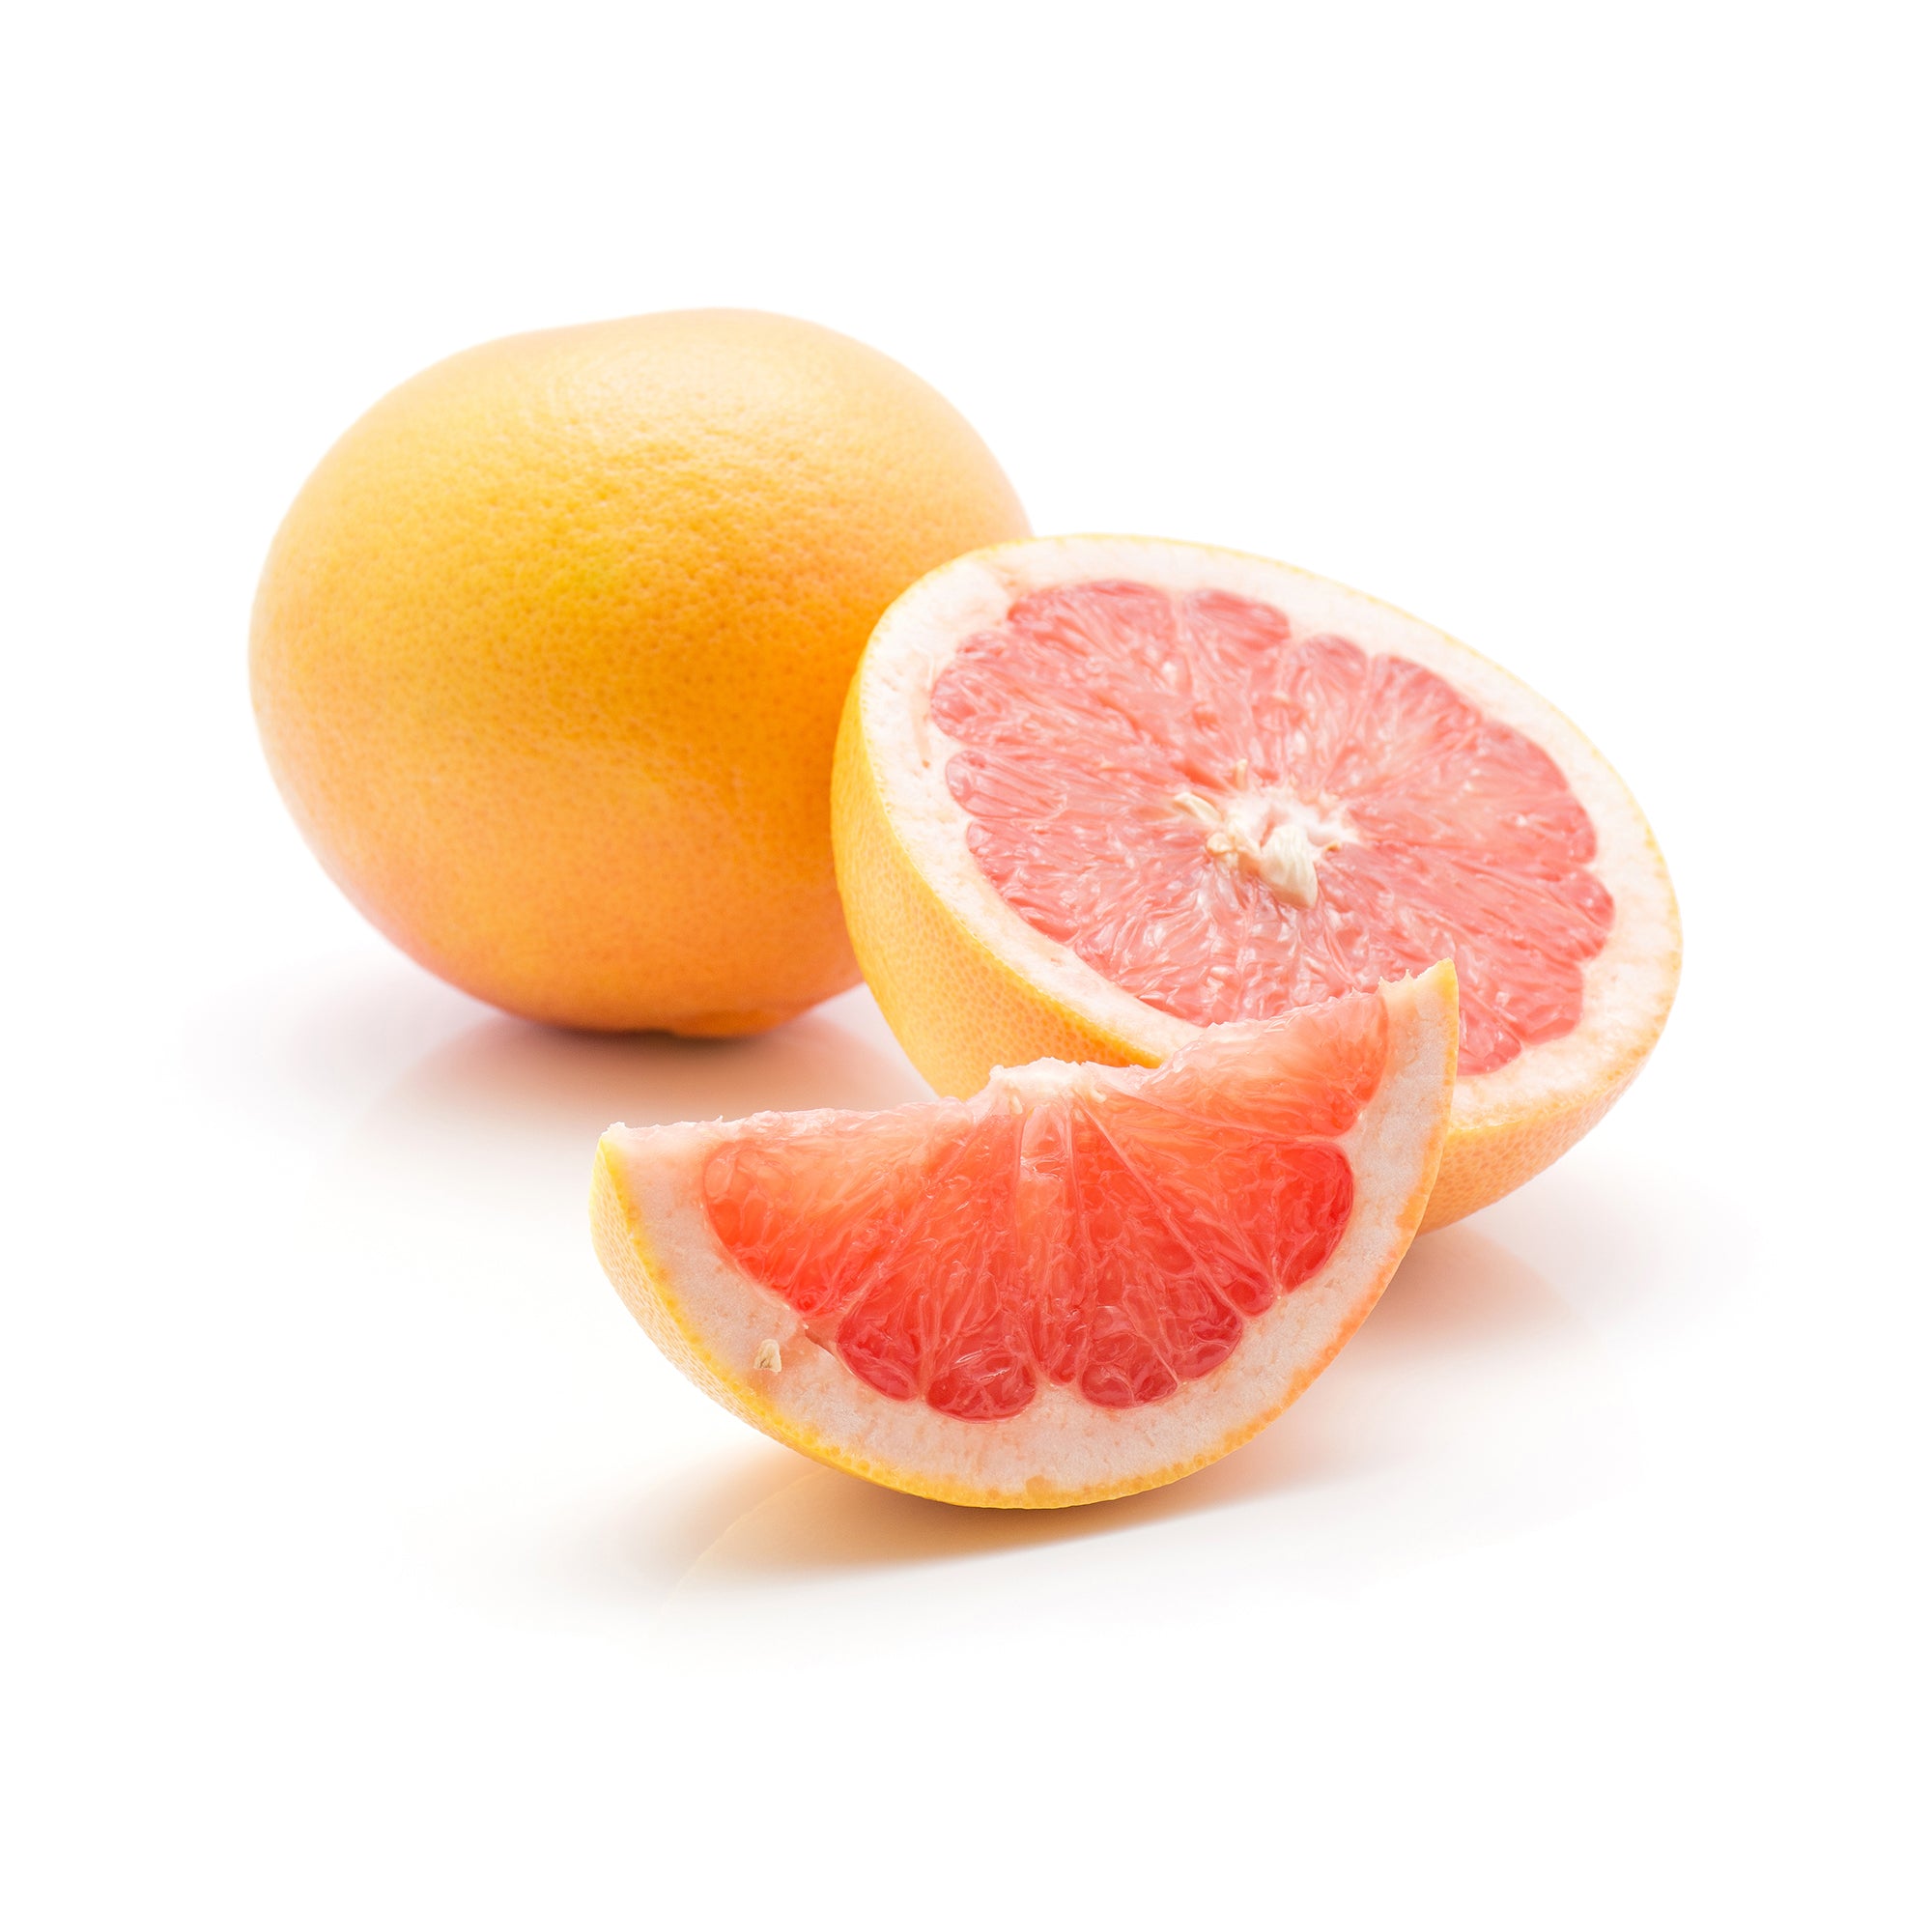 Grapefruit - Star Ruby | Exotic Fruits - Rare & Tropical Exotic Fruit Shop UK